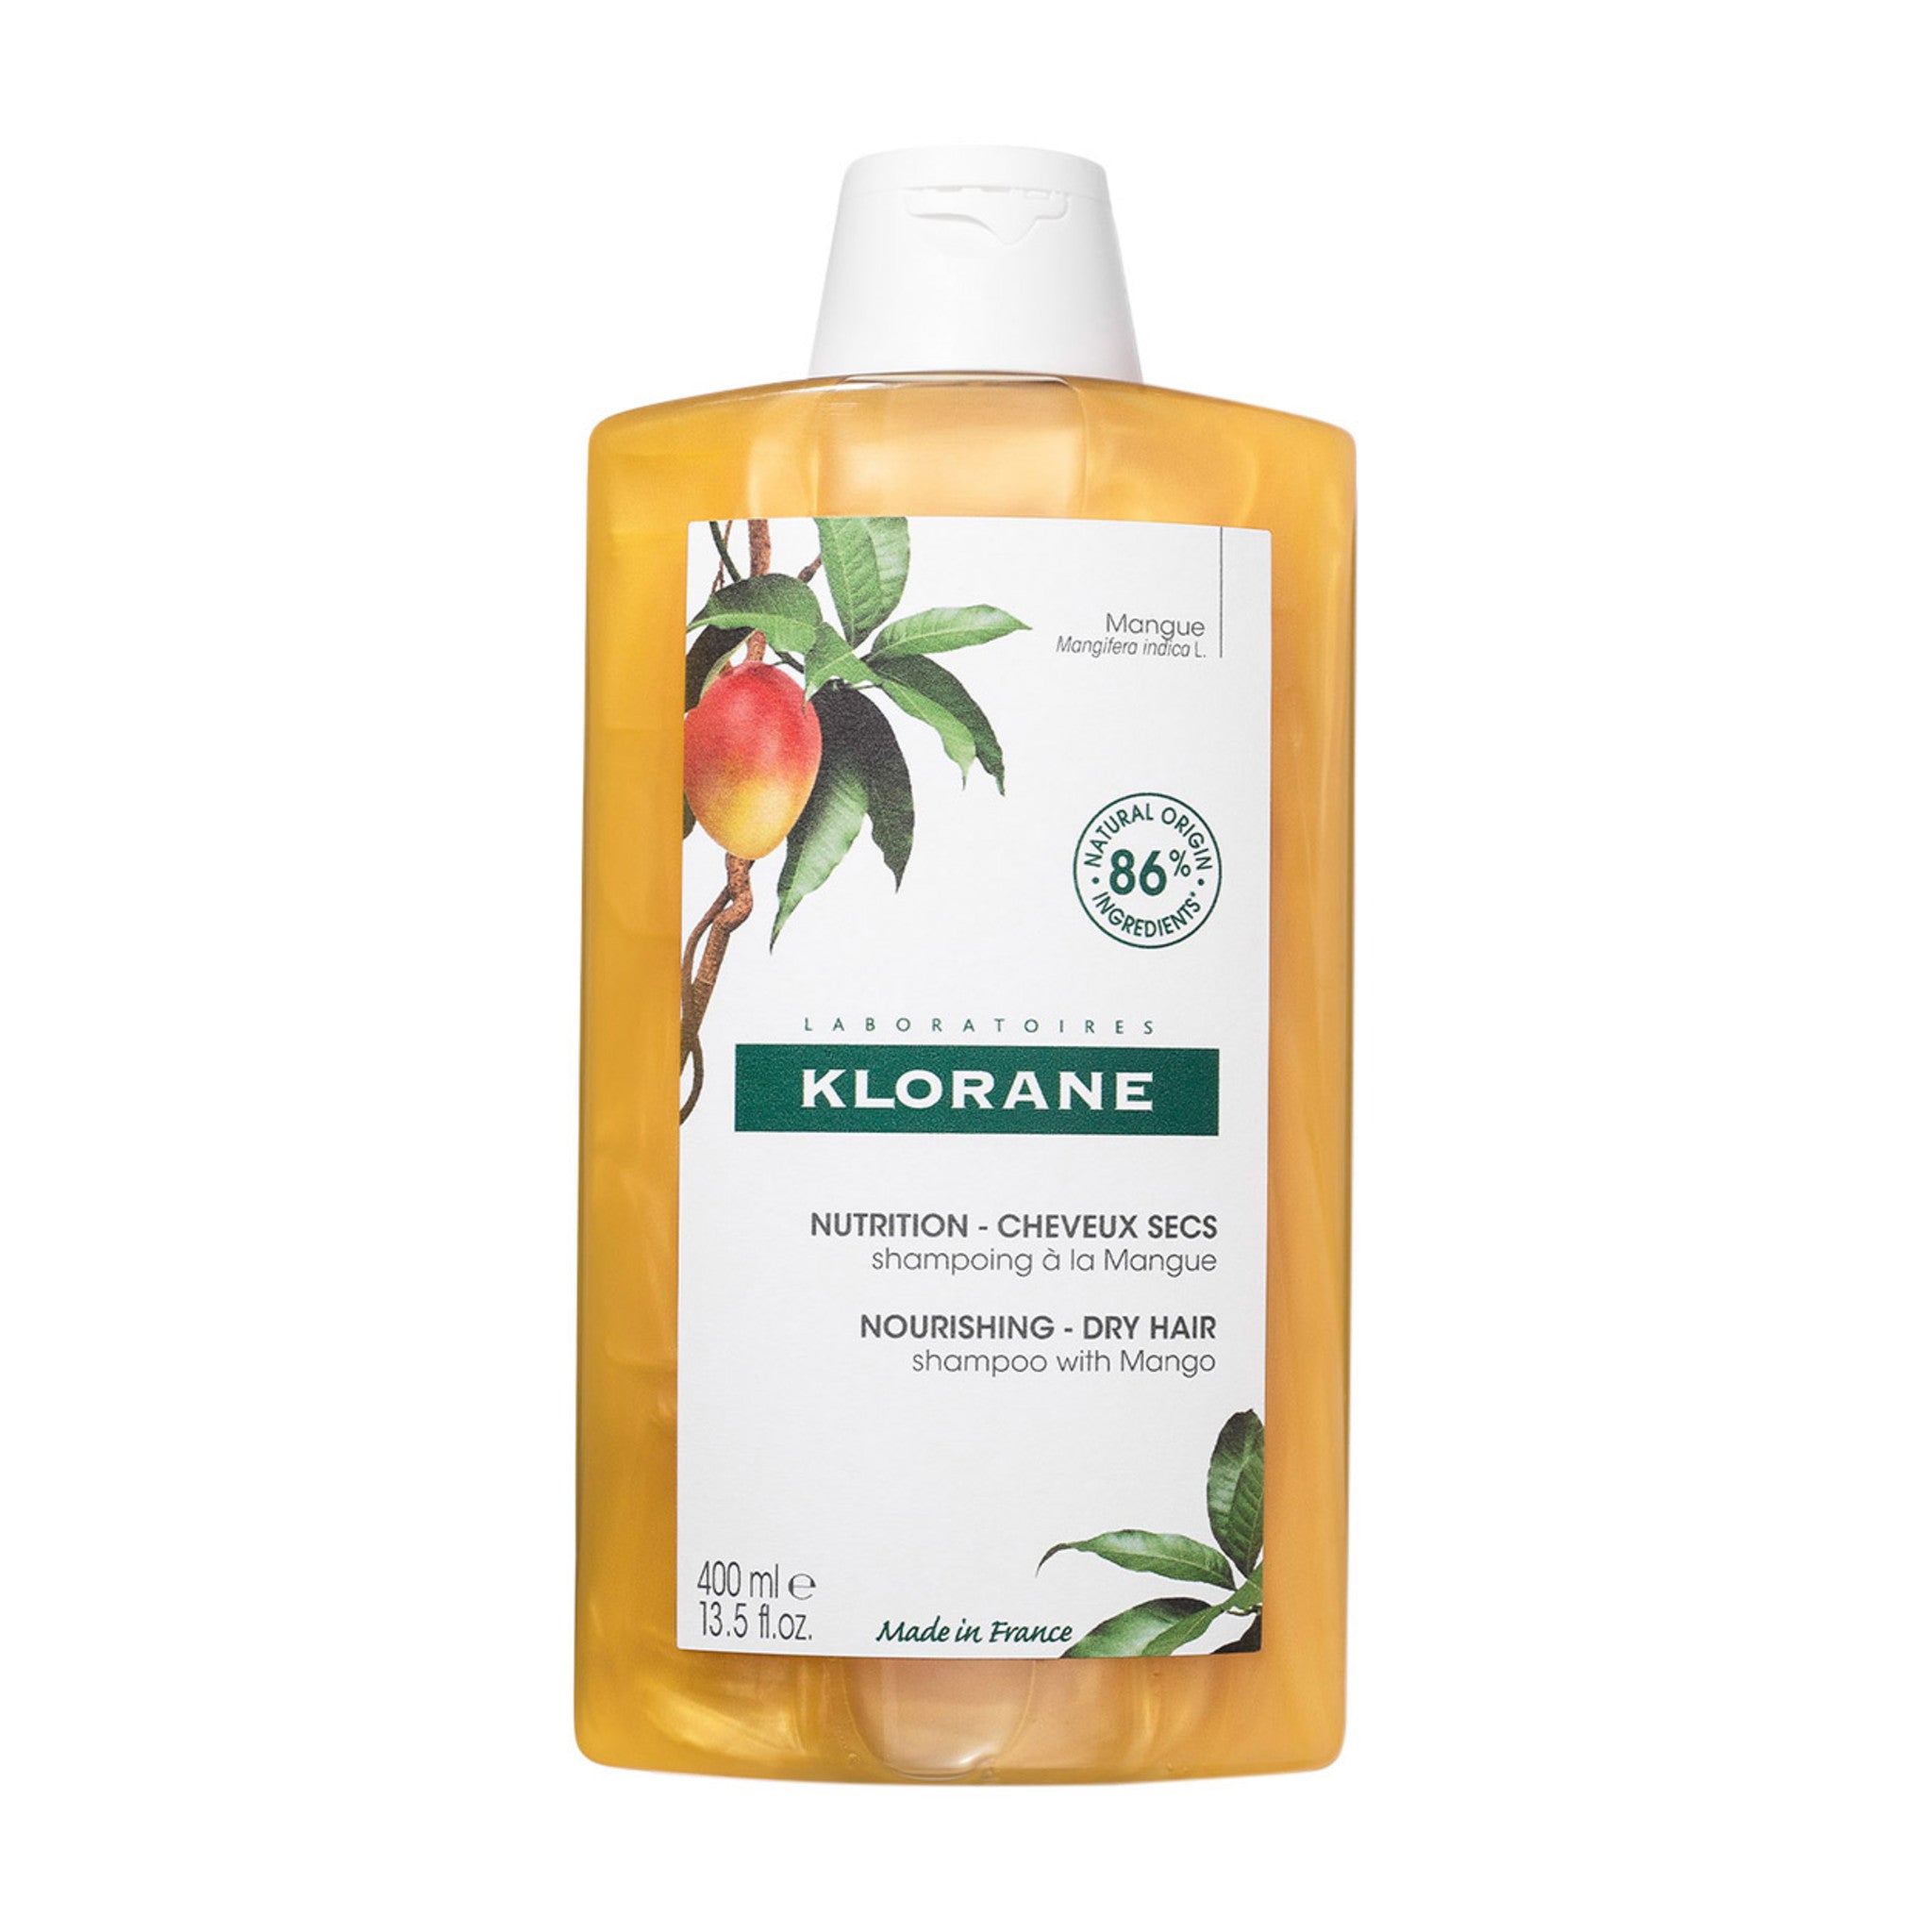 Klorane Nourishing Dry Hair Shampoo With Mango main image.